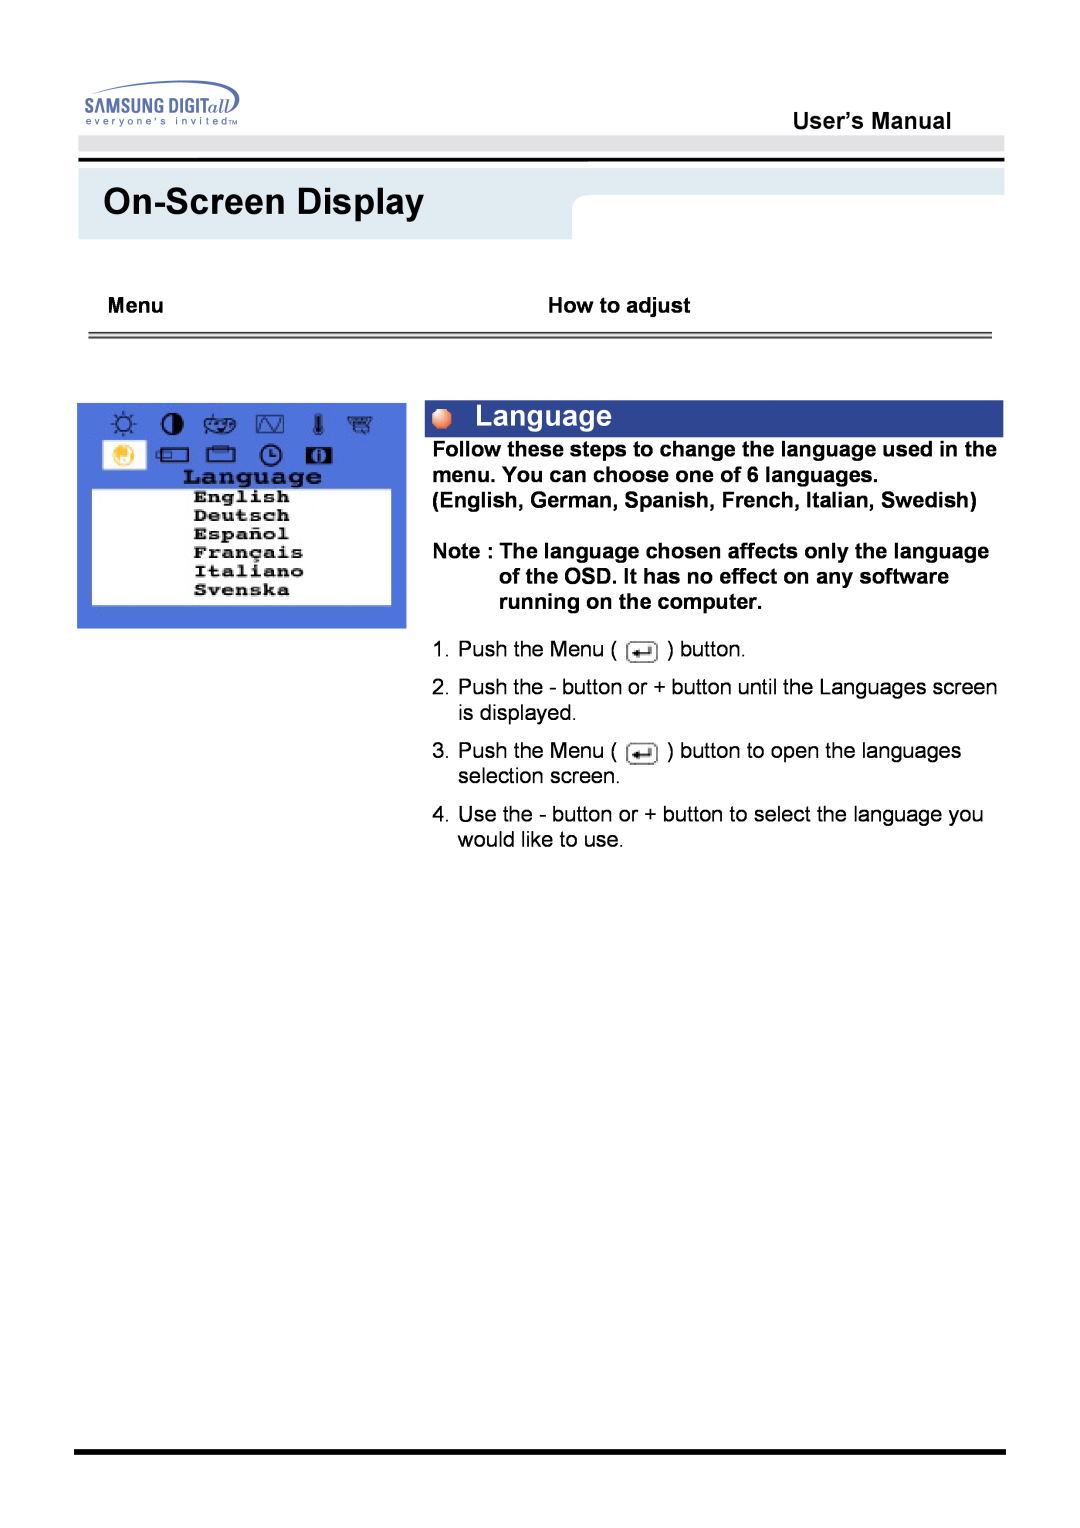 Samsung 151D user manual Language, On-Screen Display, User’s Manual 